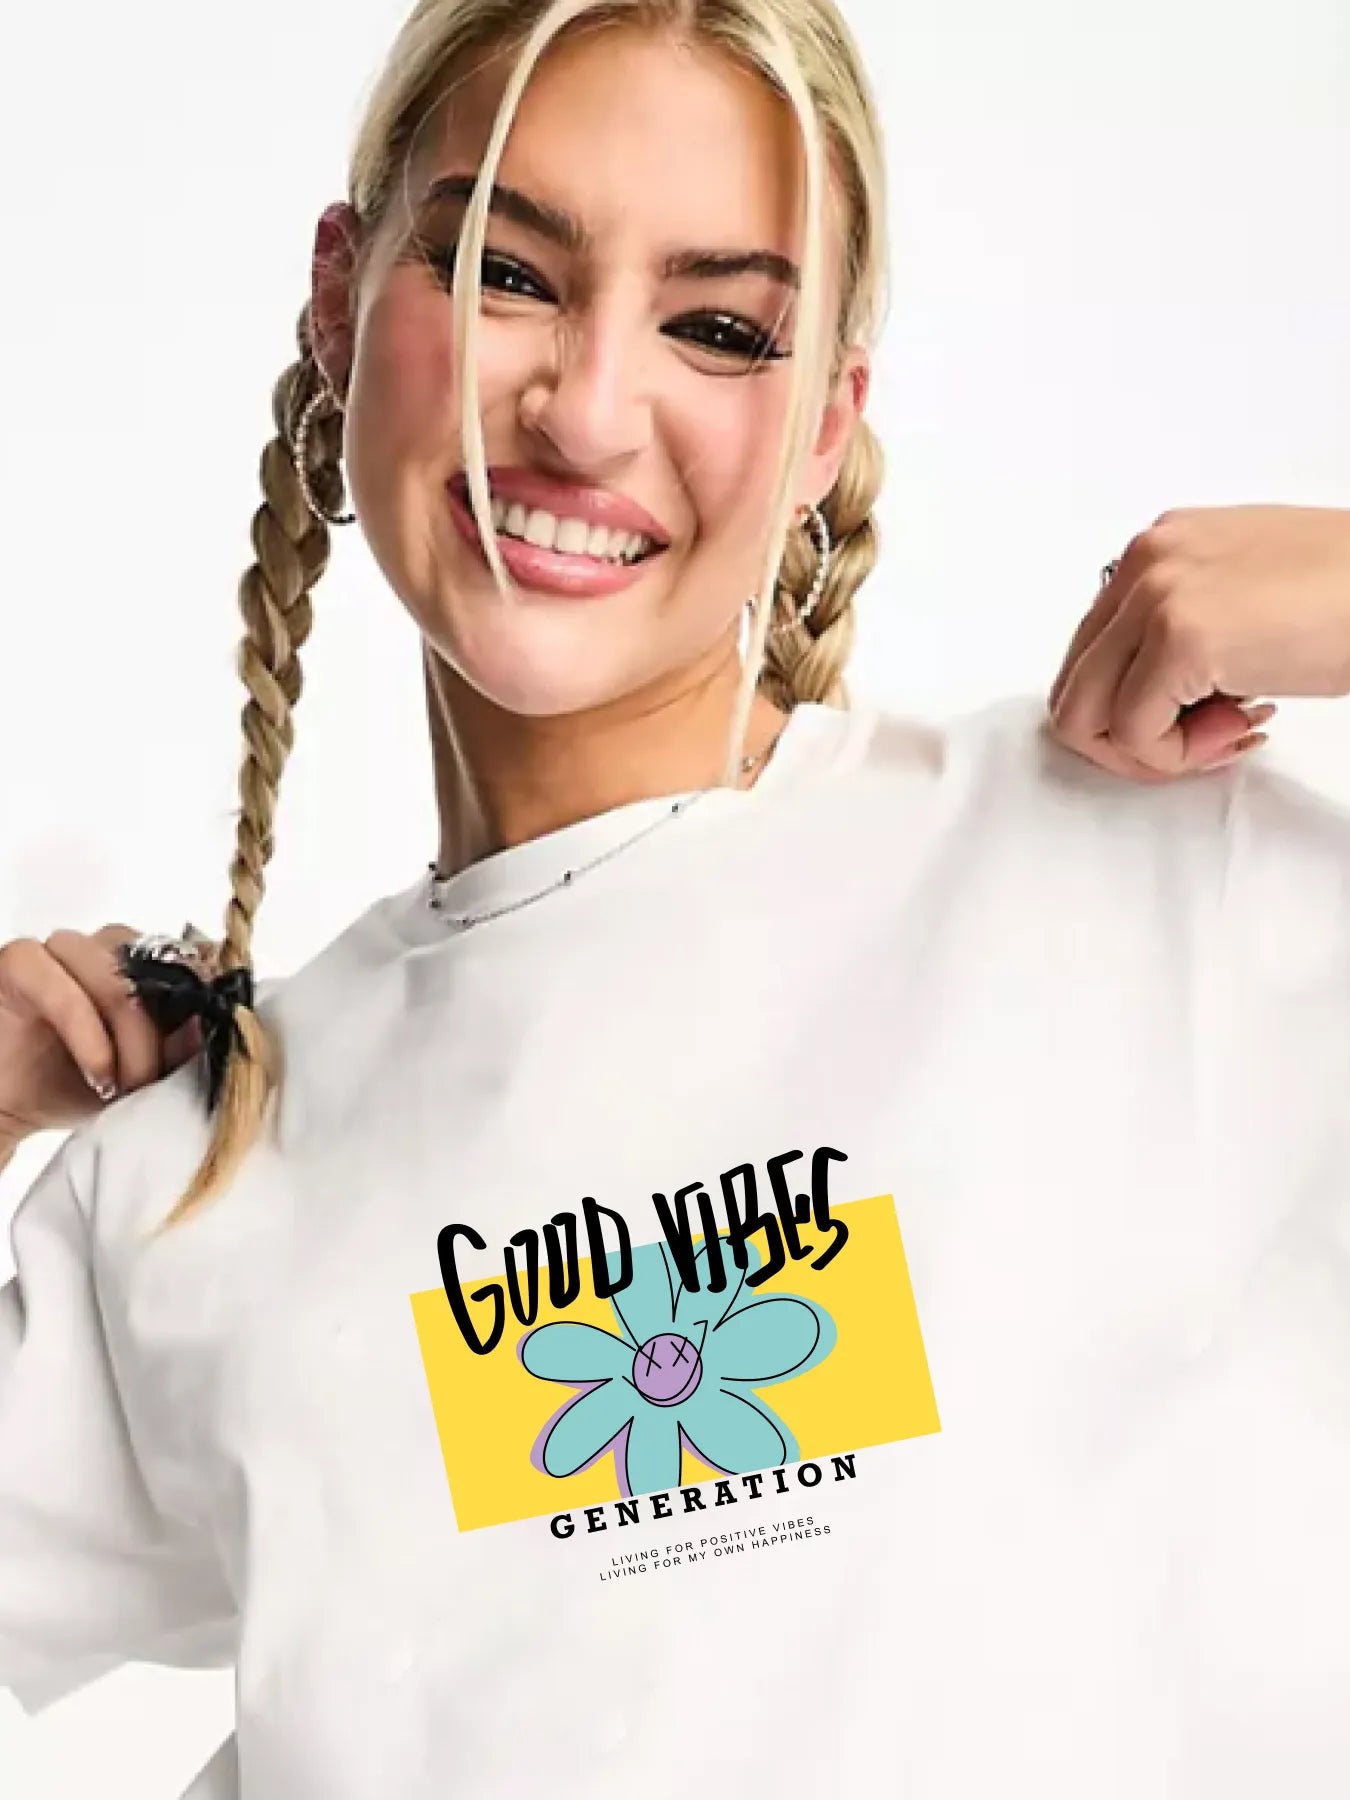 Good Vibe Generation - T-Shirt